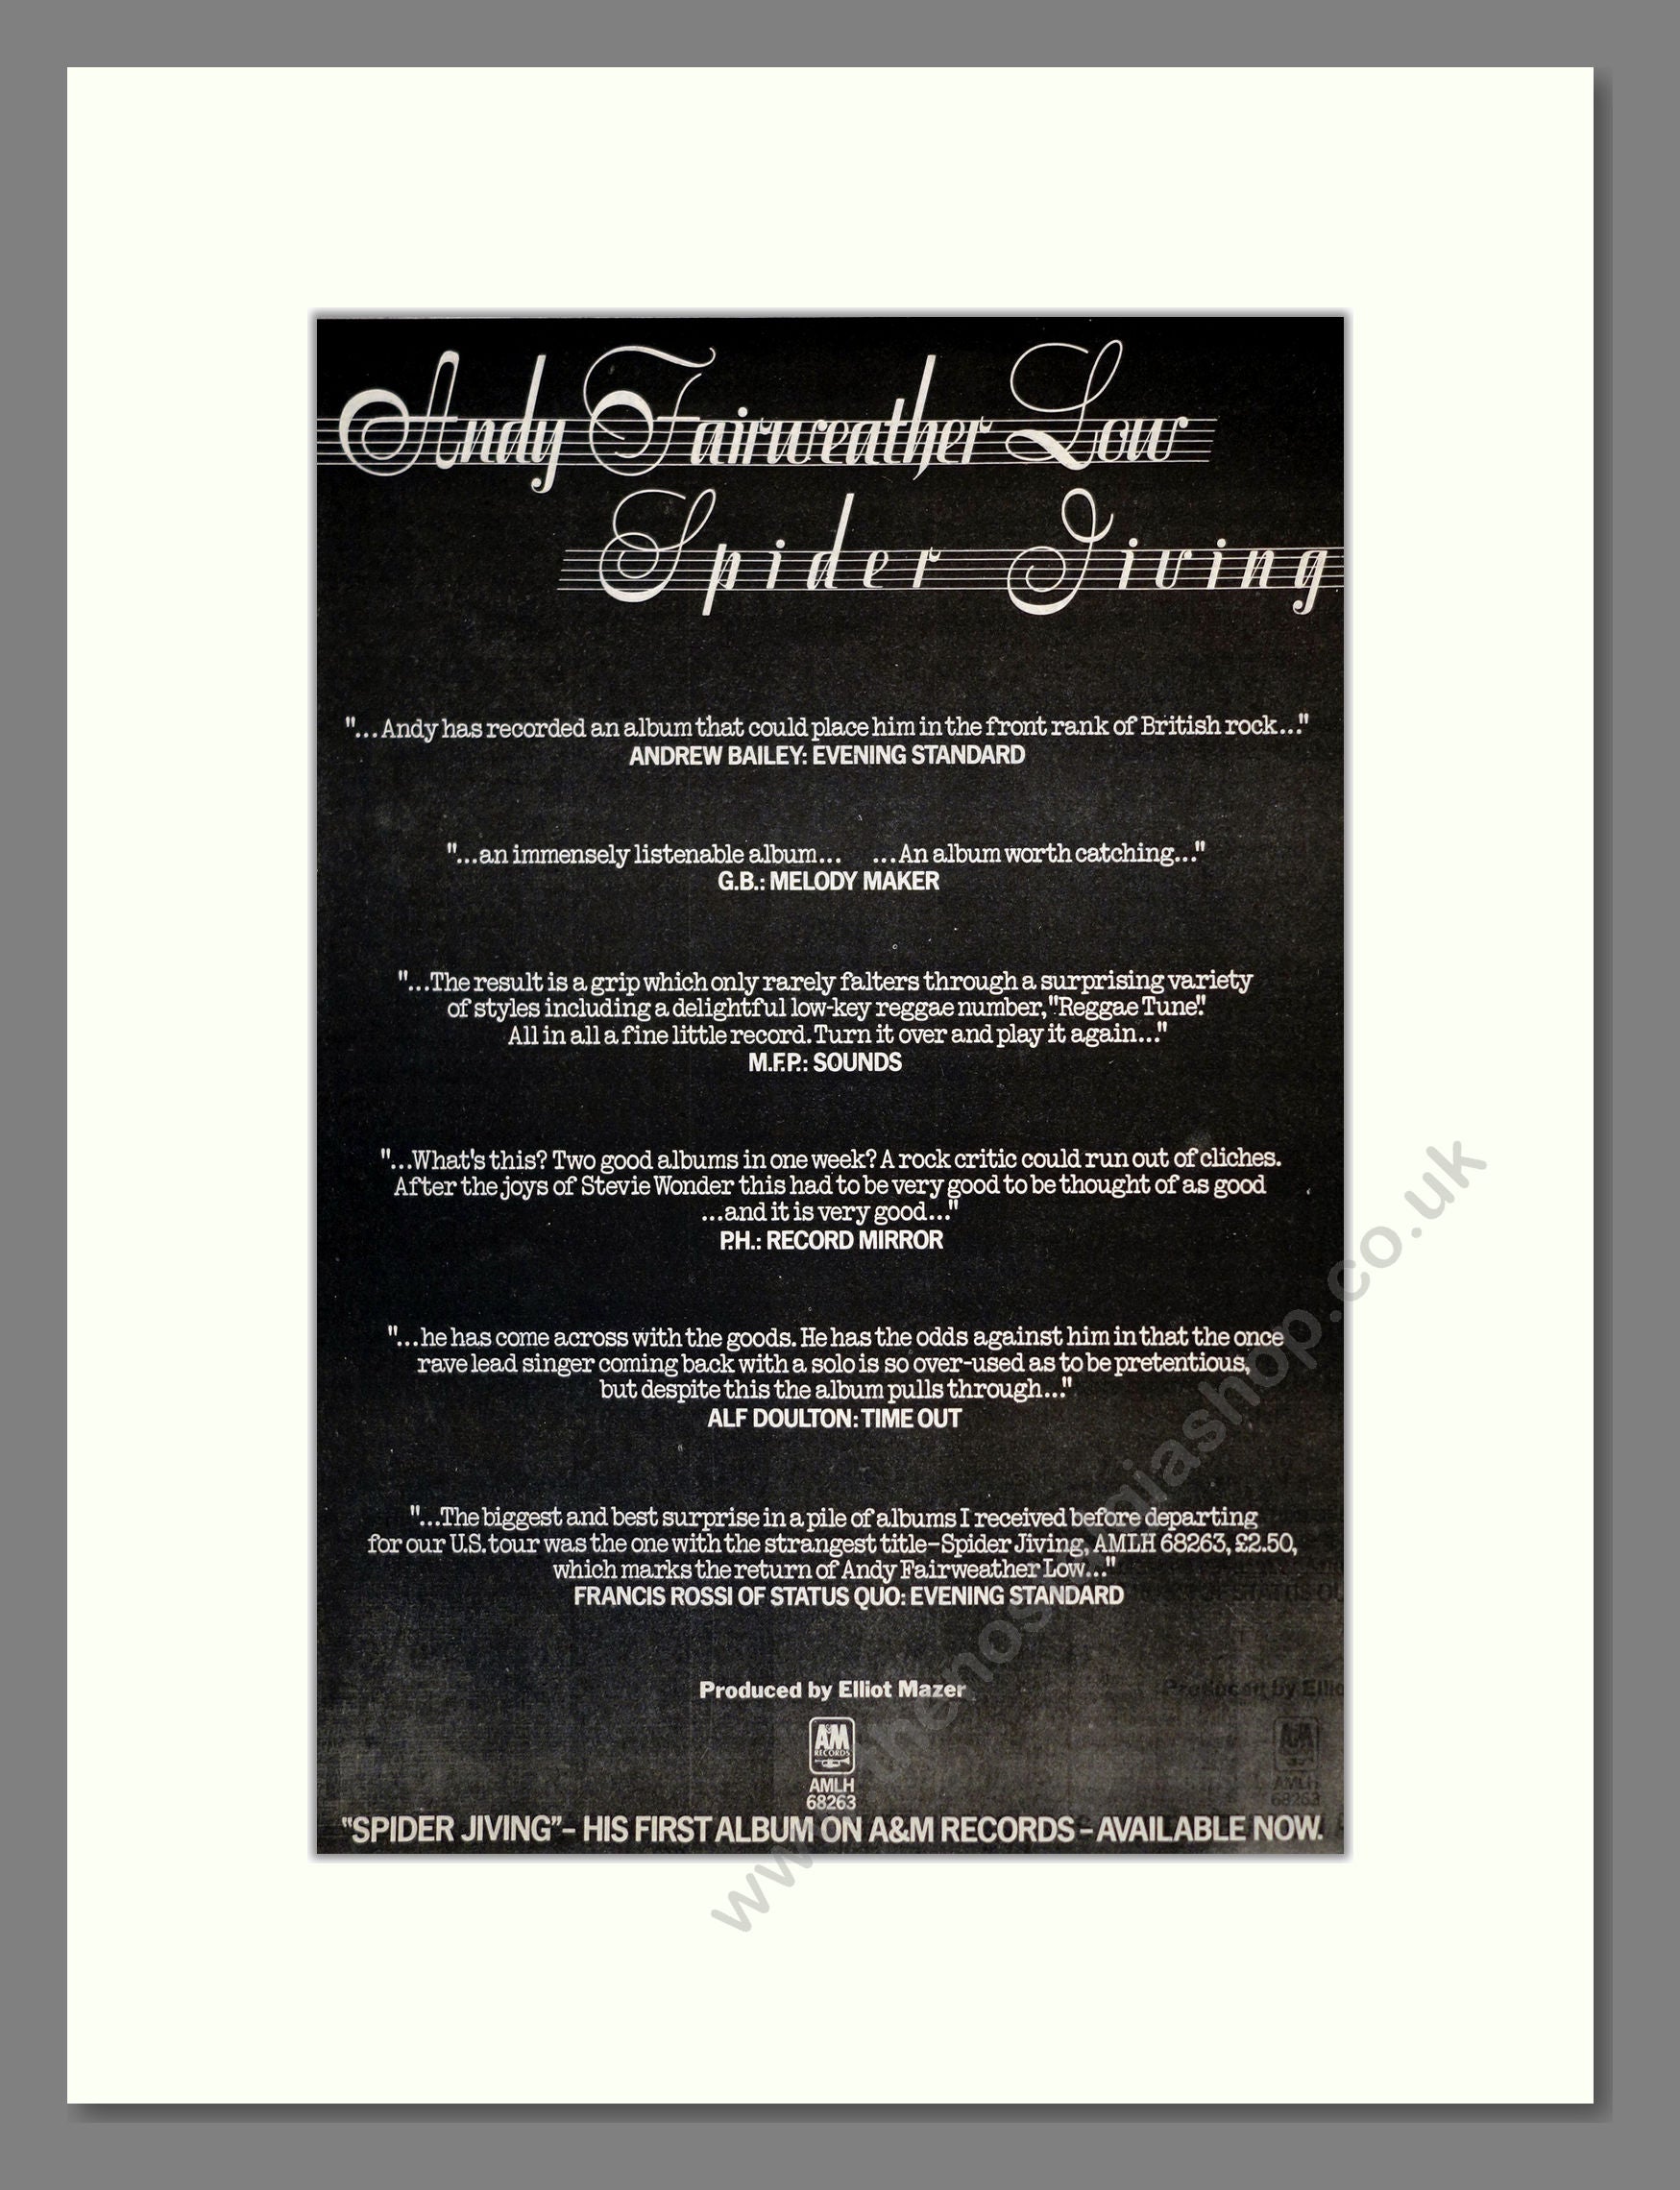 Andy Fairweather Low - Spider Jiving. Vintage Advert 1974 (ref AD17799)